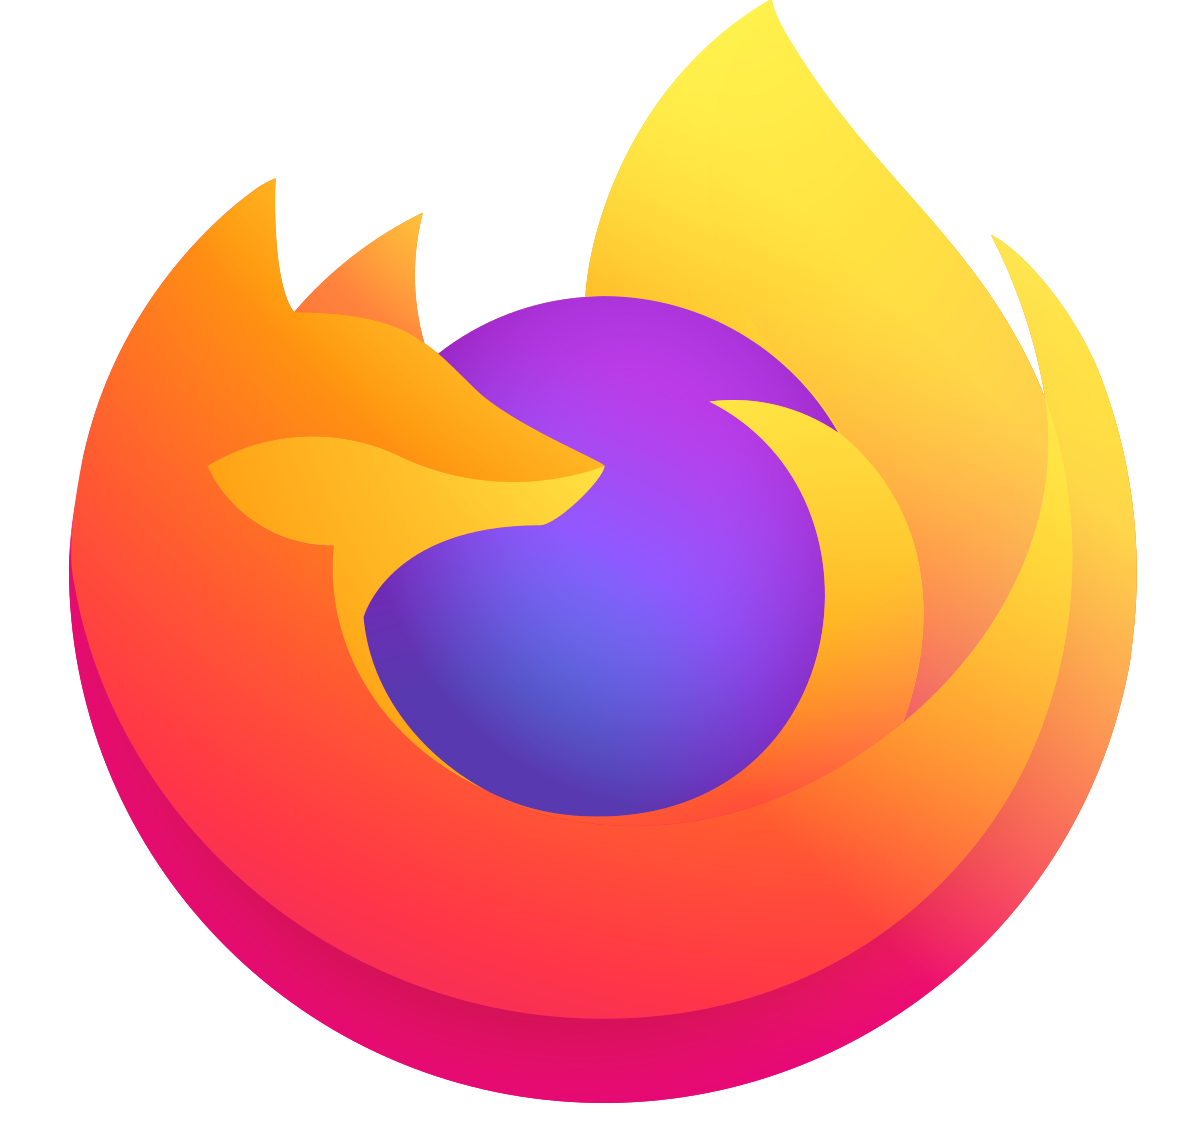 mozilla firefox for mac desktop